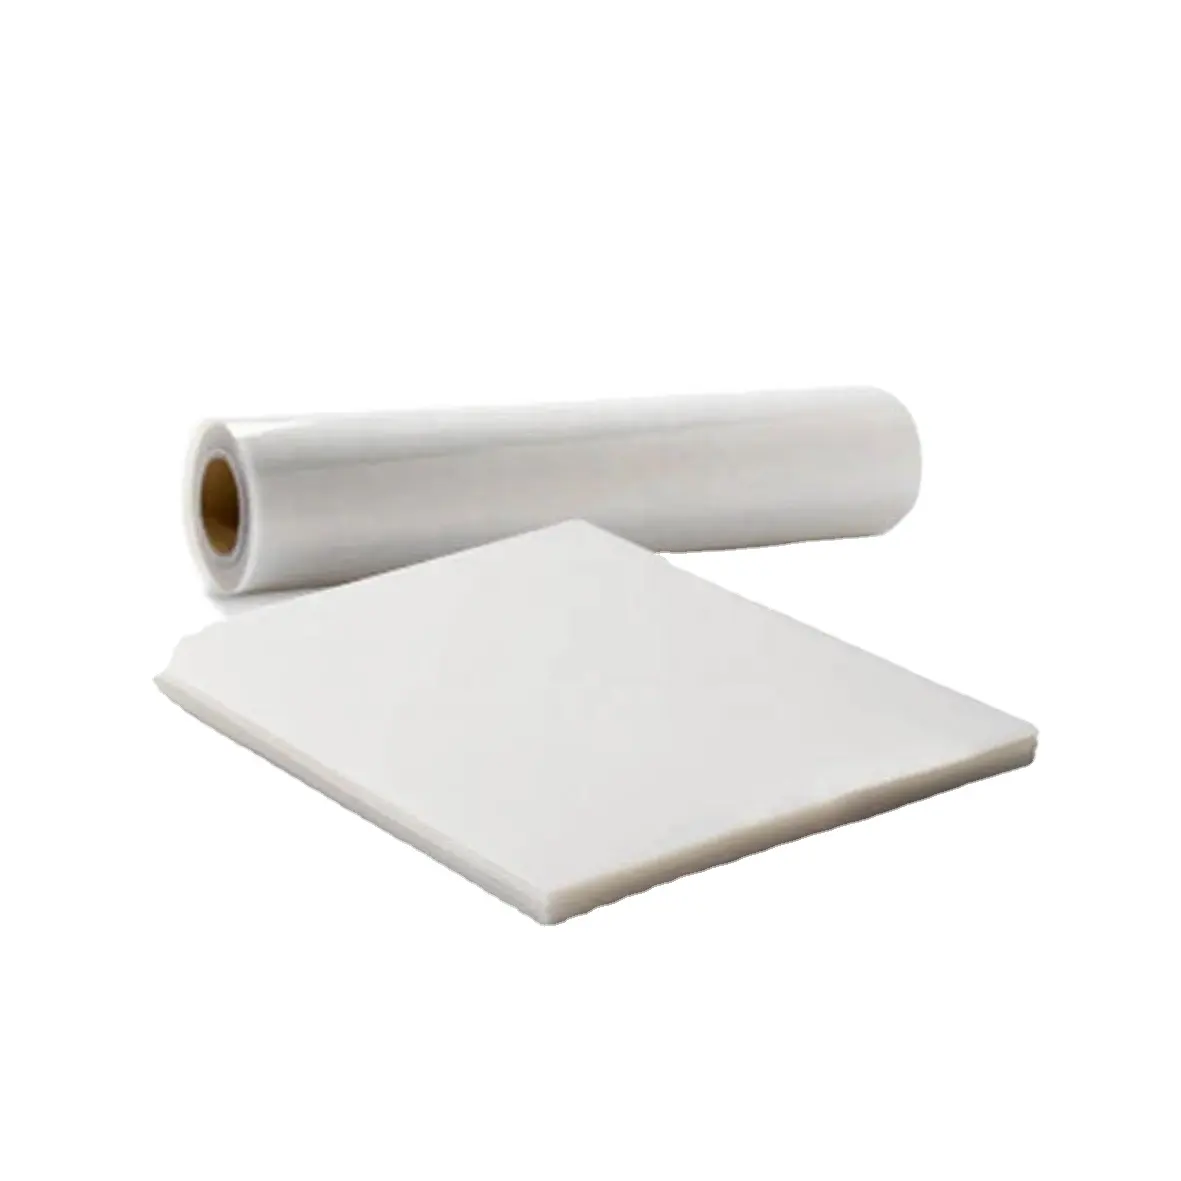 t-shirt blank transparent heat transfer printing vinyl film or  paper 60 dtf membrane sticker film i3200